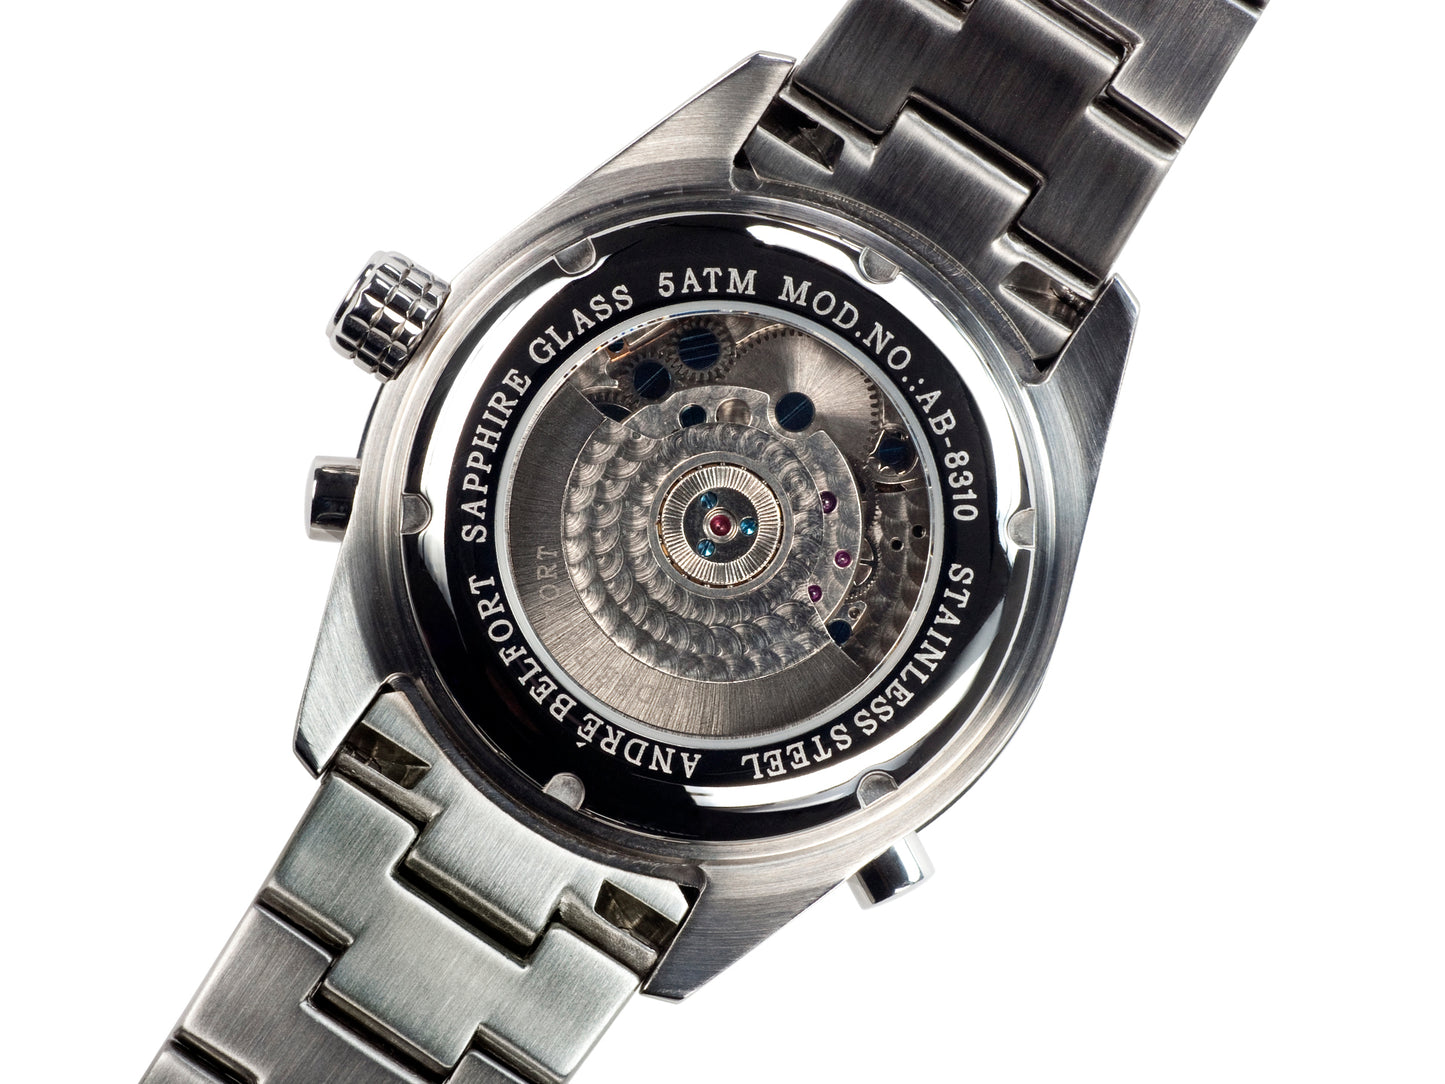 Automatic watches — Voilier — André Belfort — steel black